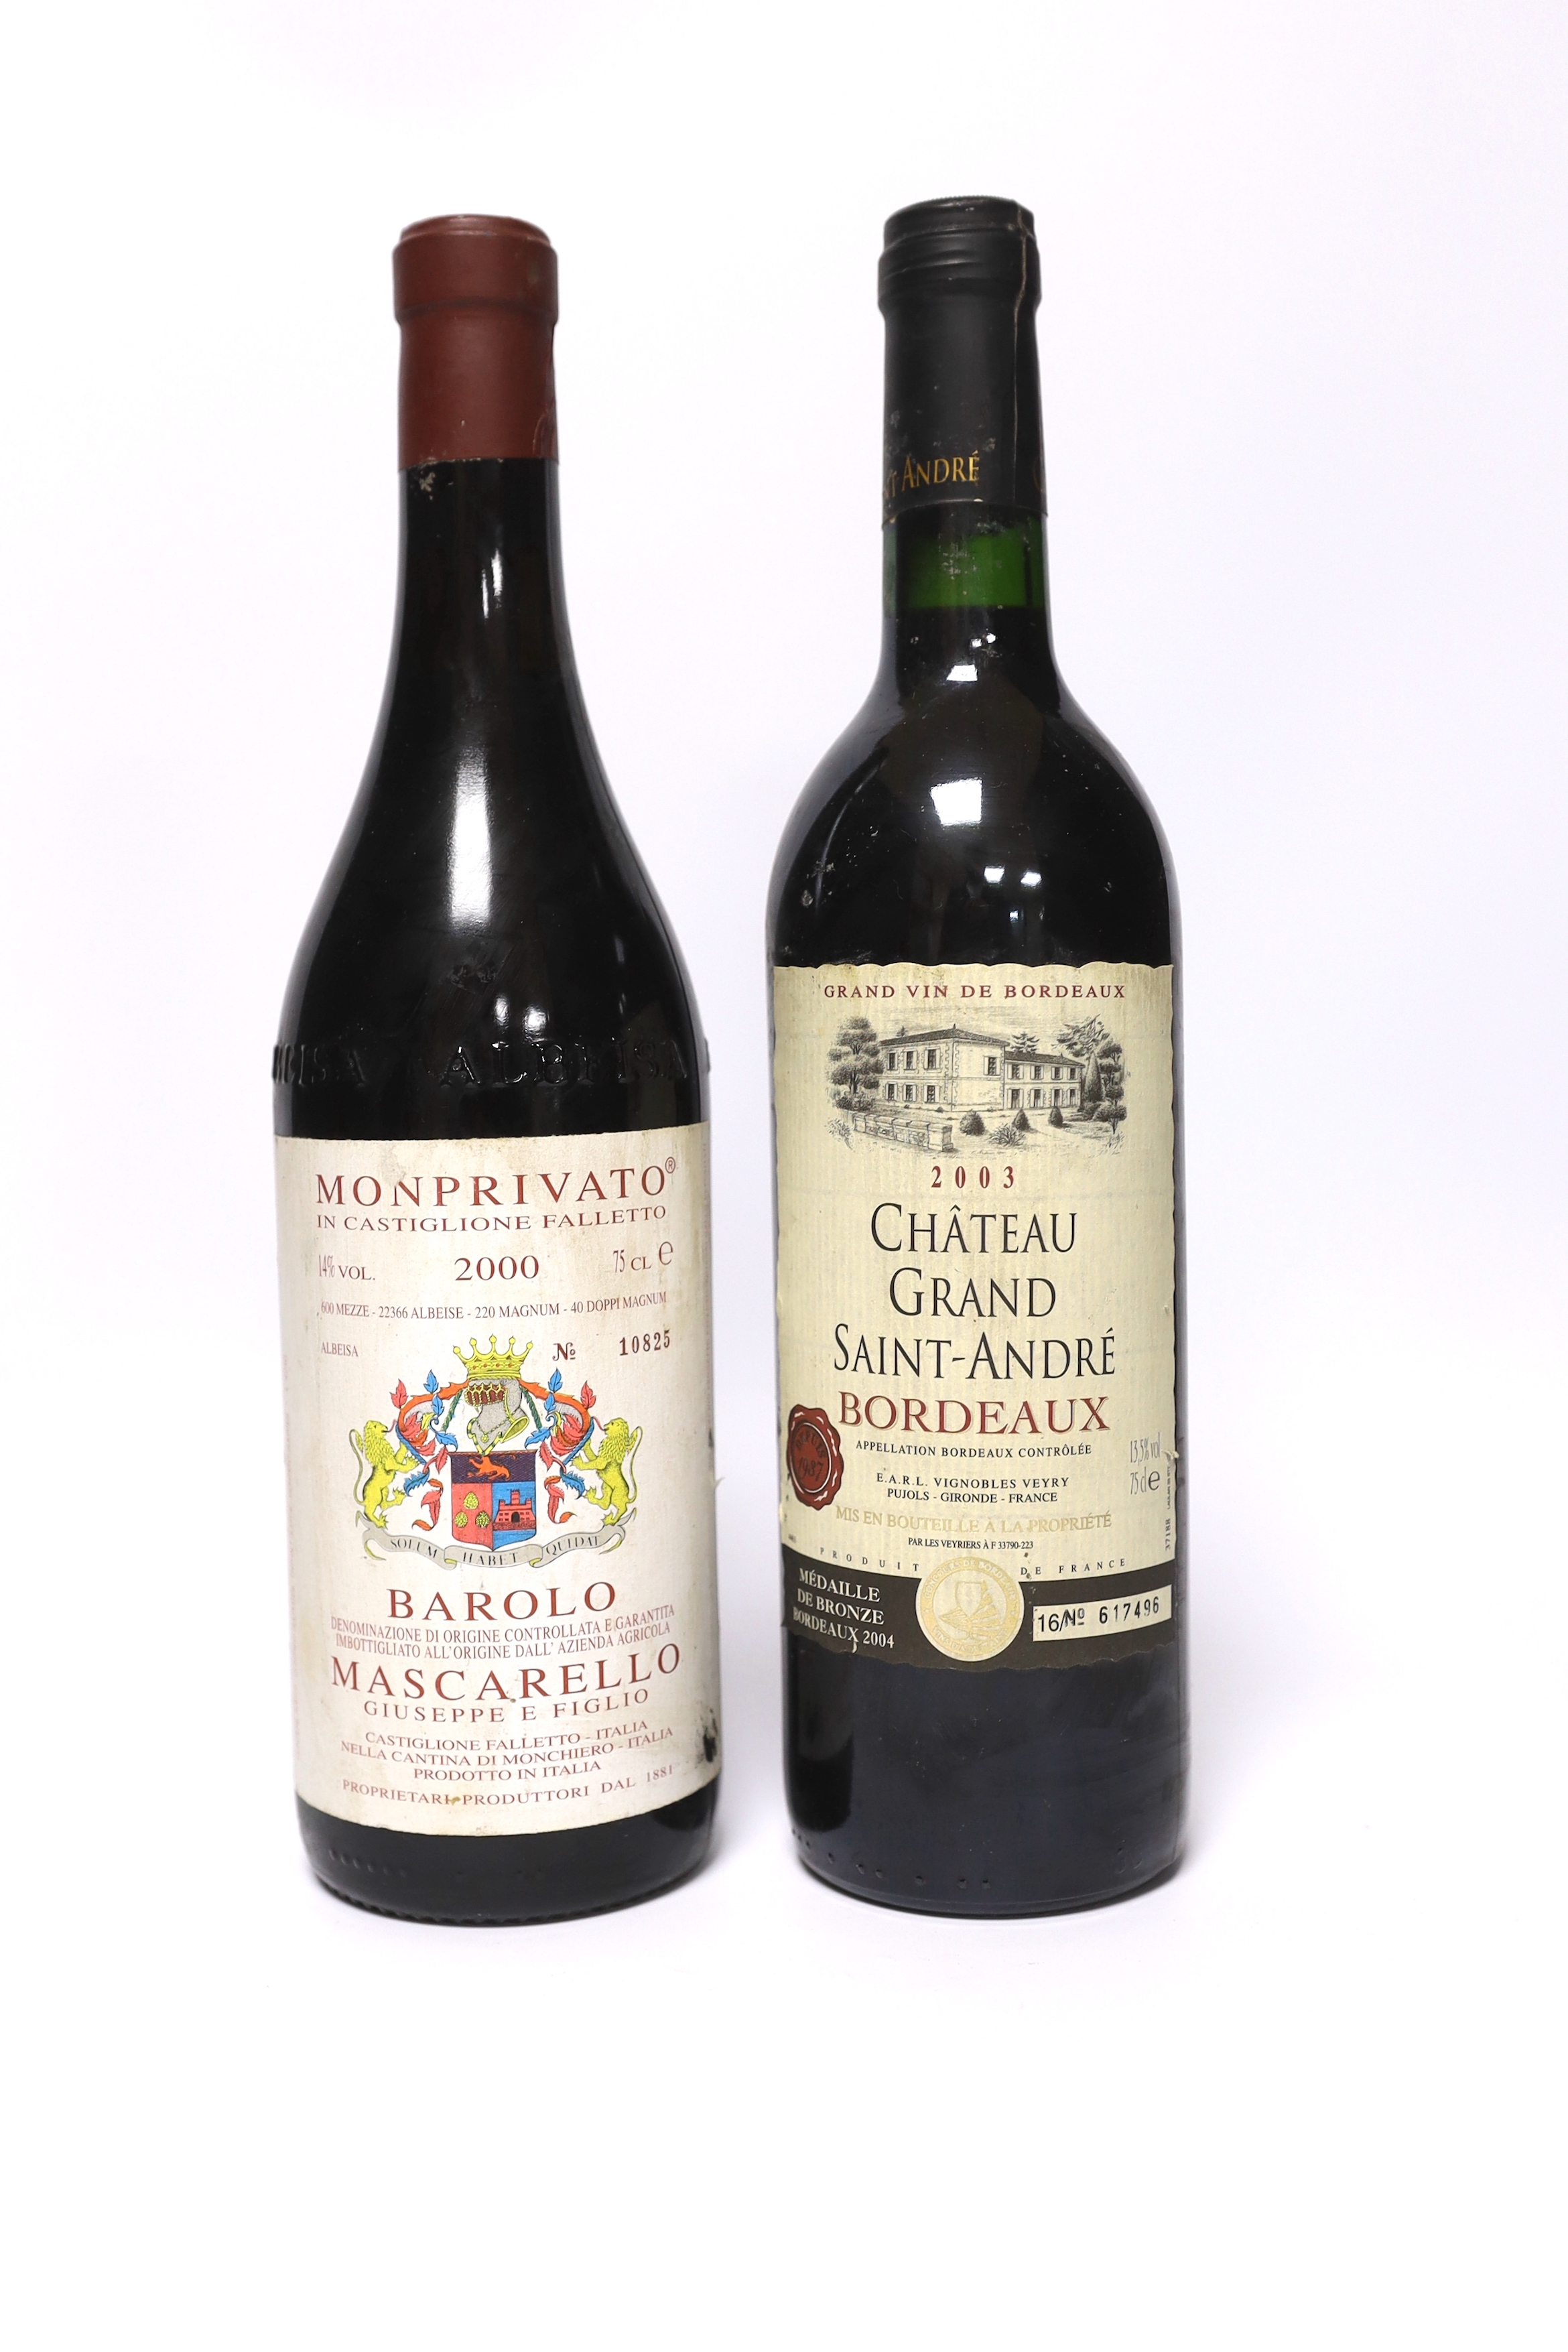 A bottle of Chateau Grand Saint-André Bordeaux 2004 and a bottle of Monprivato Barolo Mascarello 2000